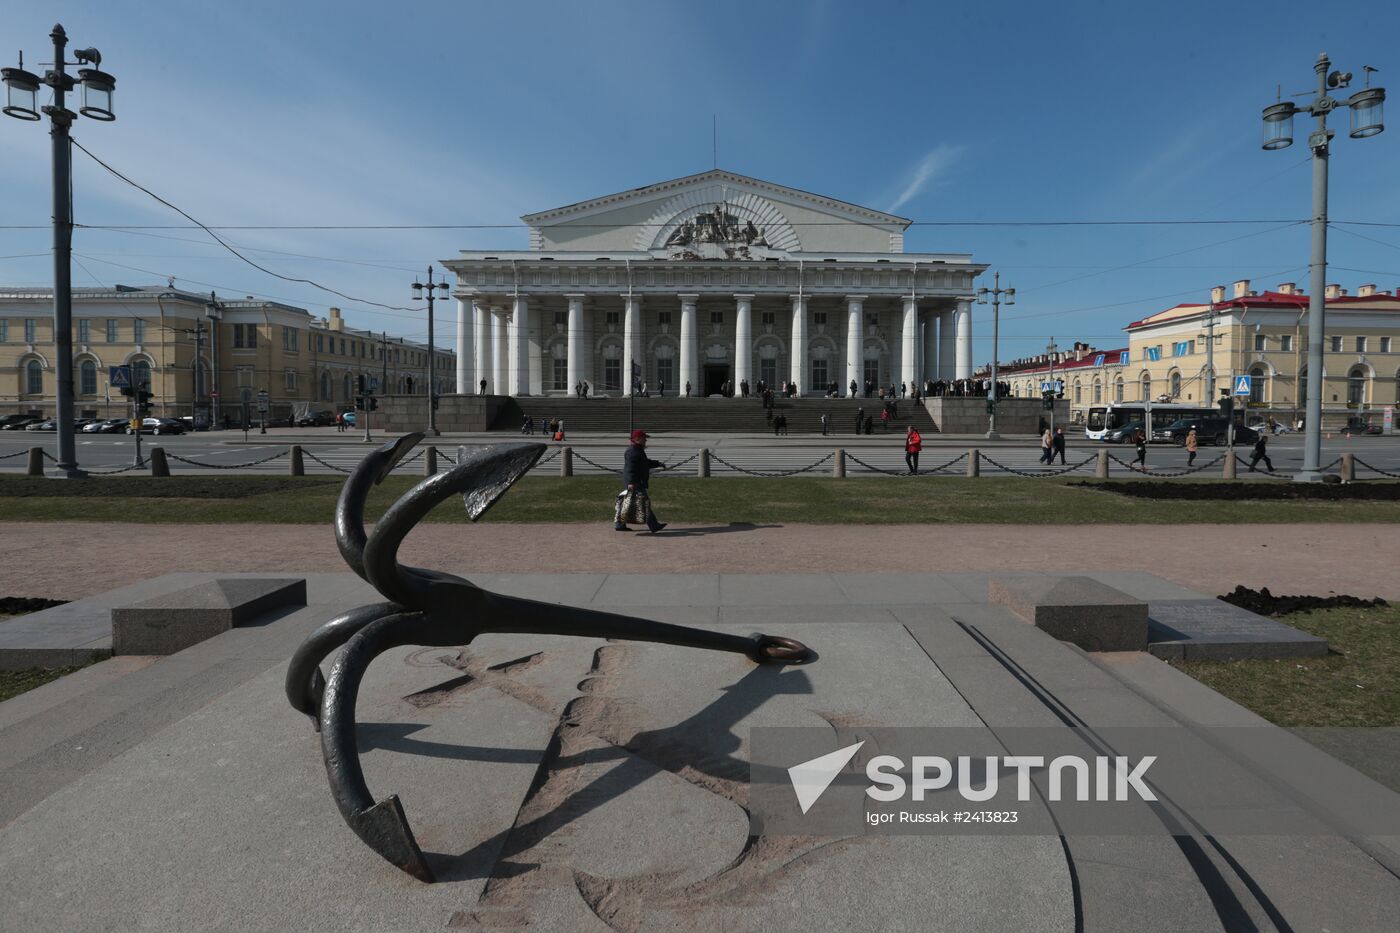 Bourse building transferred to St. Petersburg Hermitage Museum